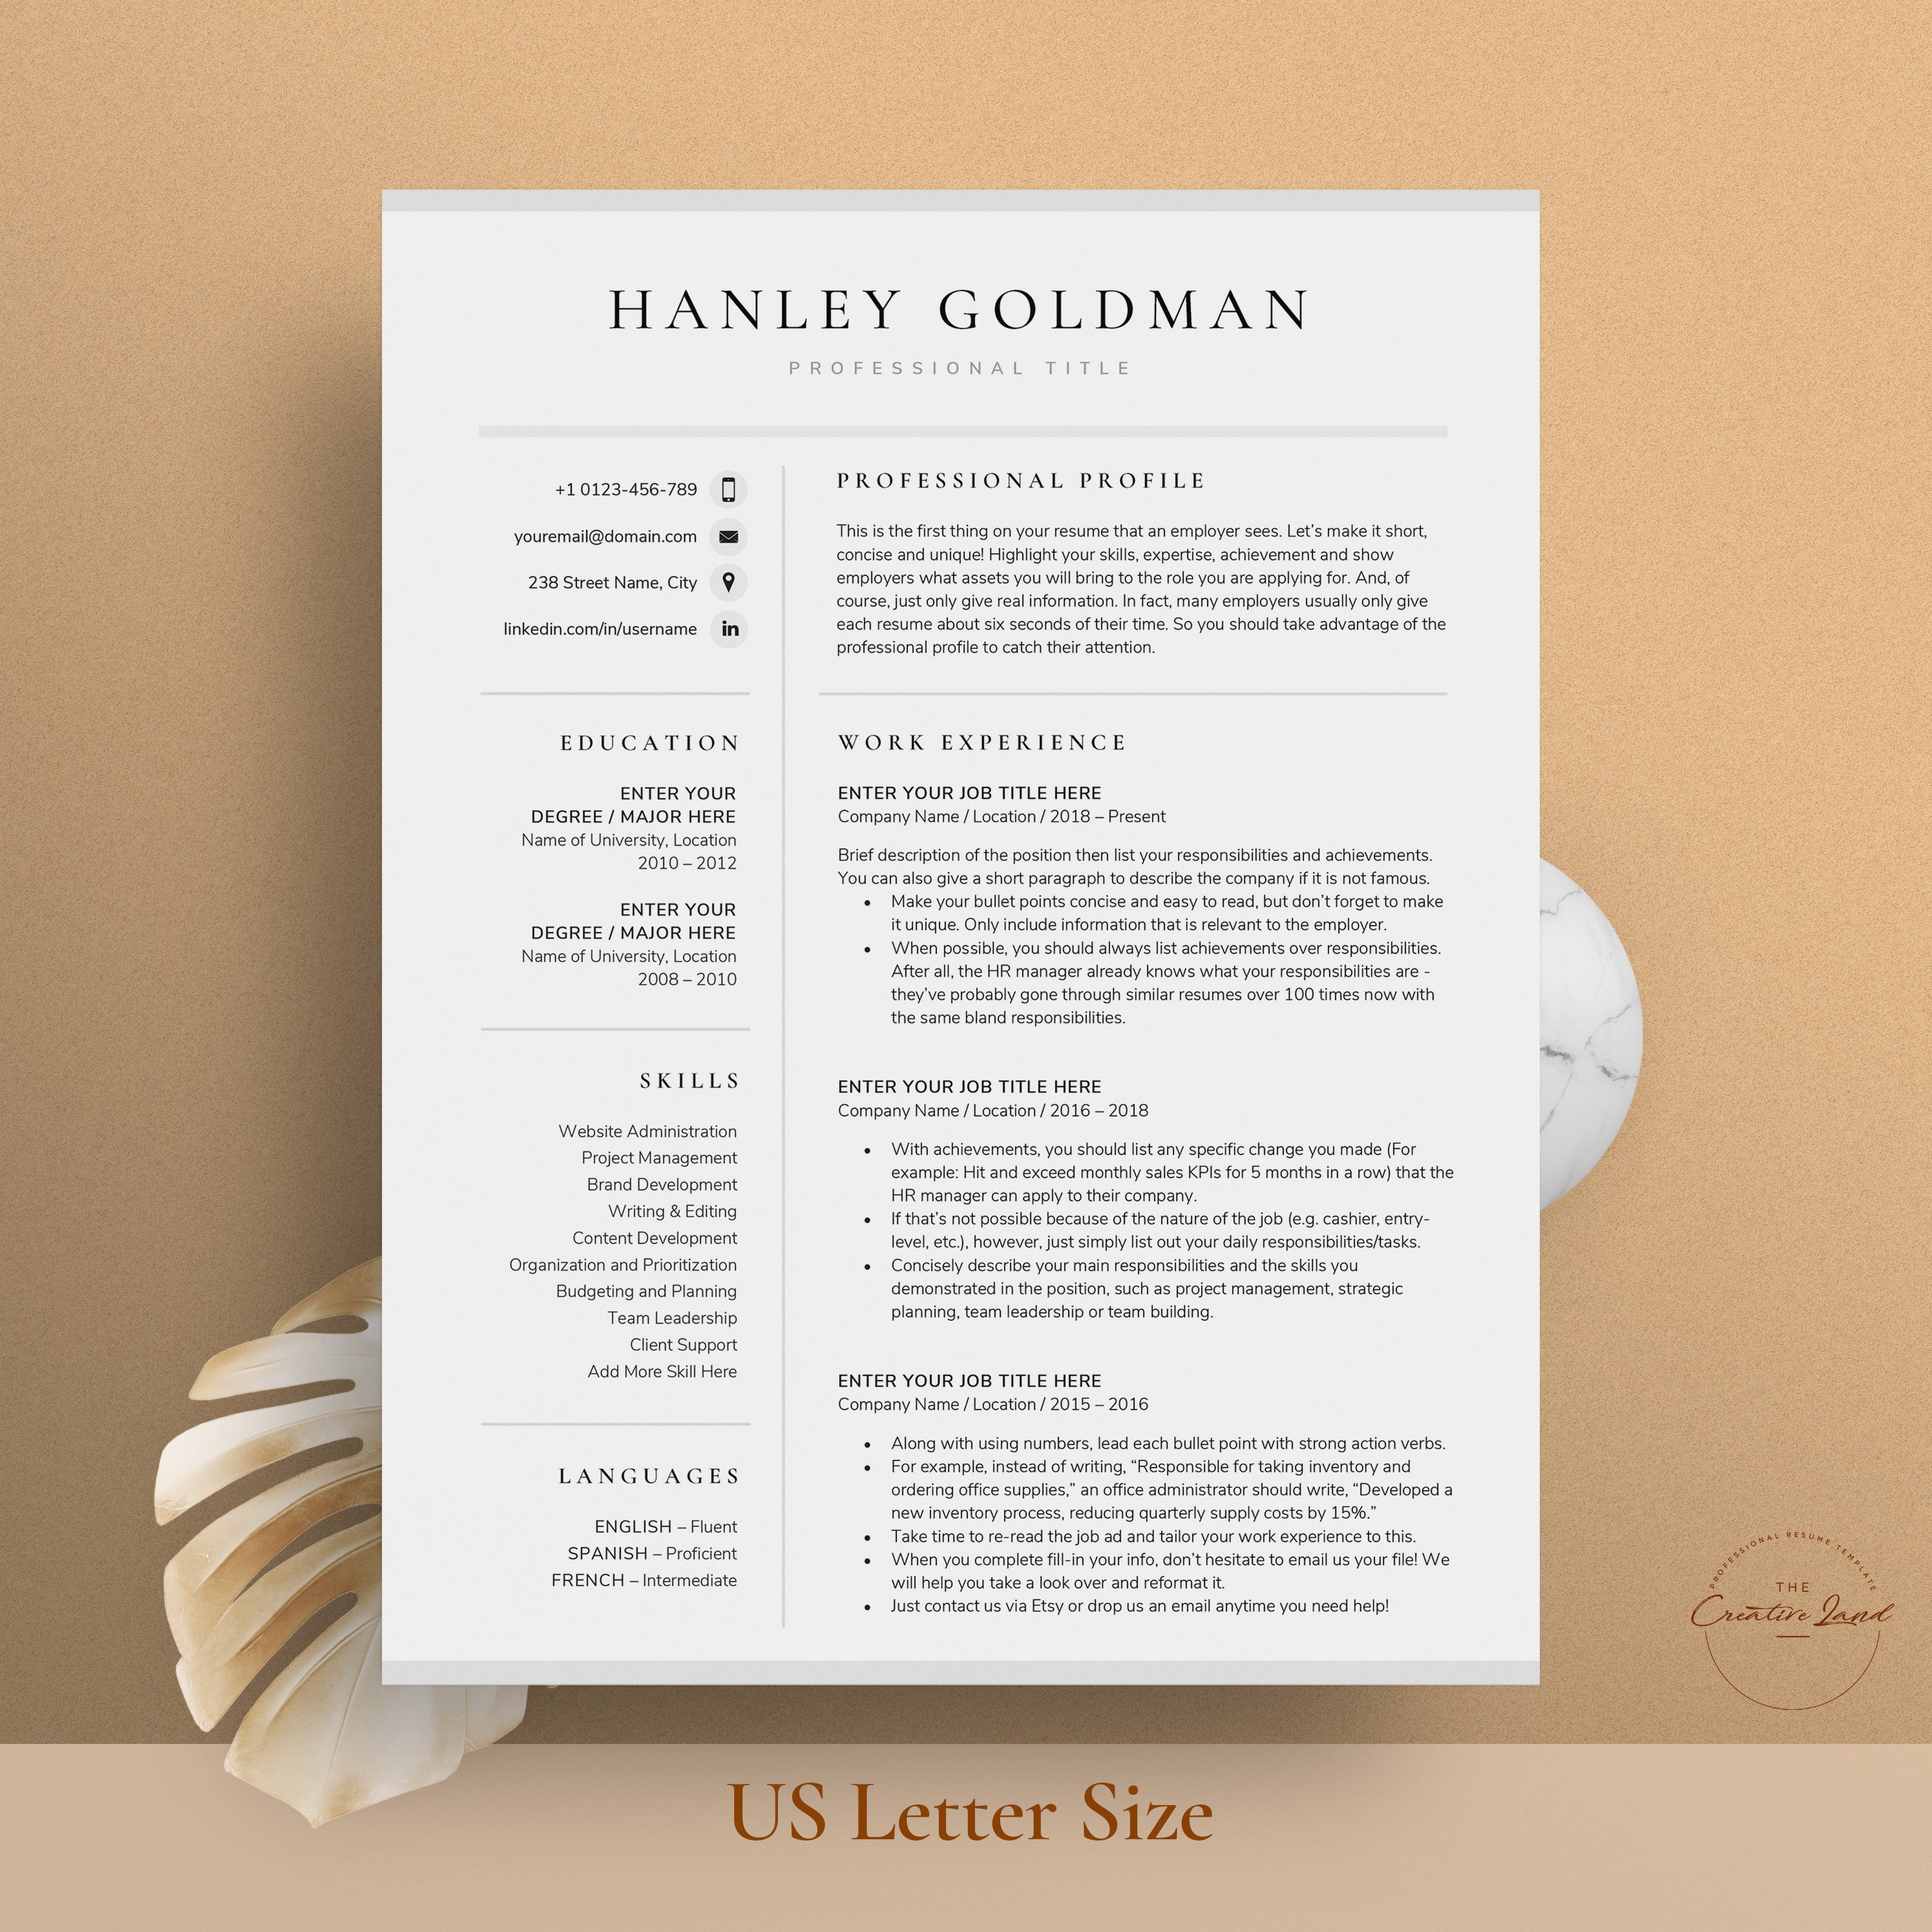 Resume/CV - The Goldman preview image.